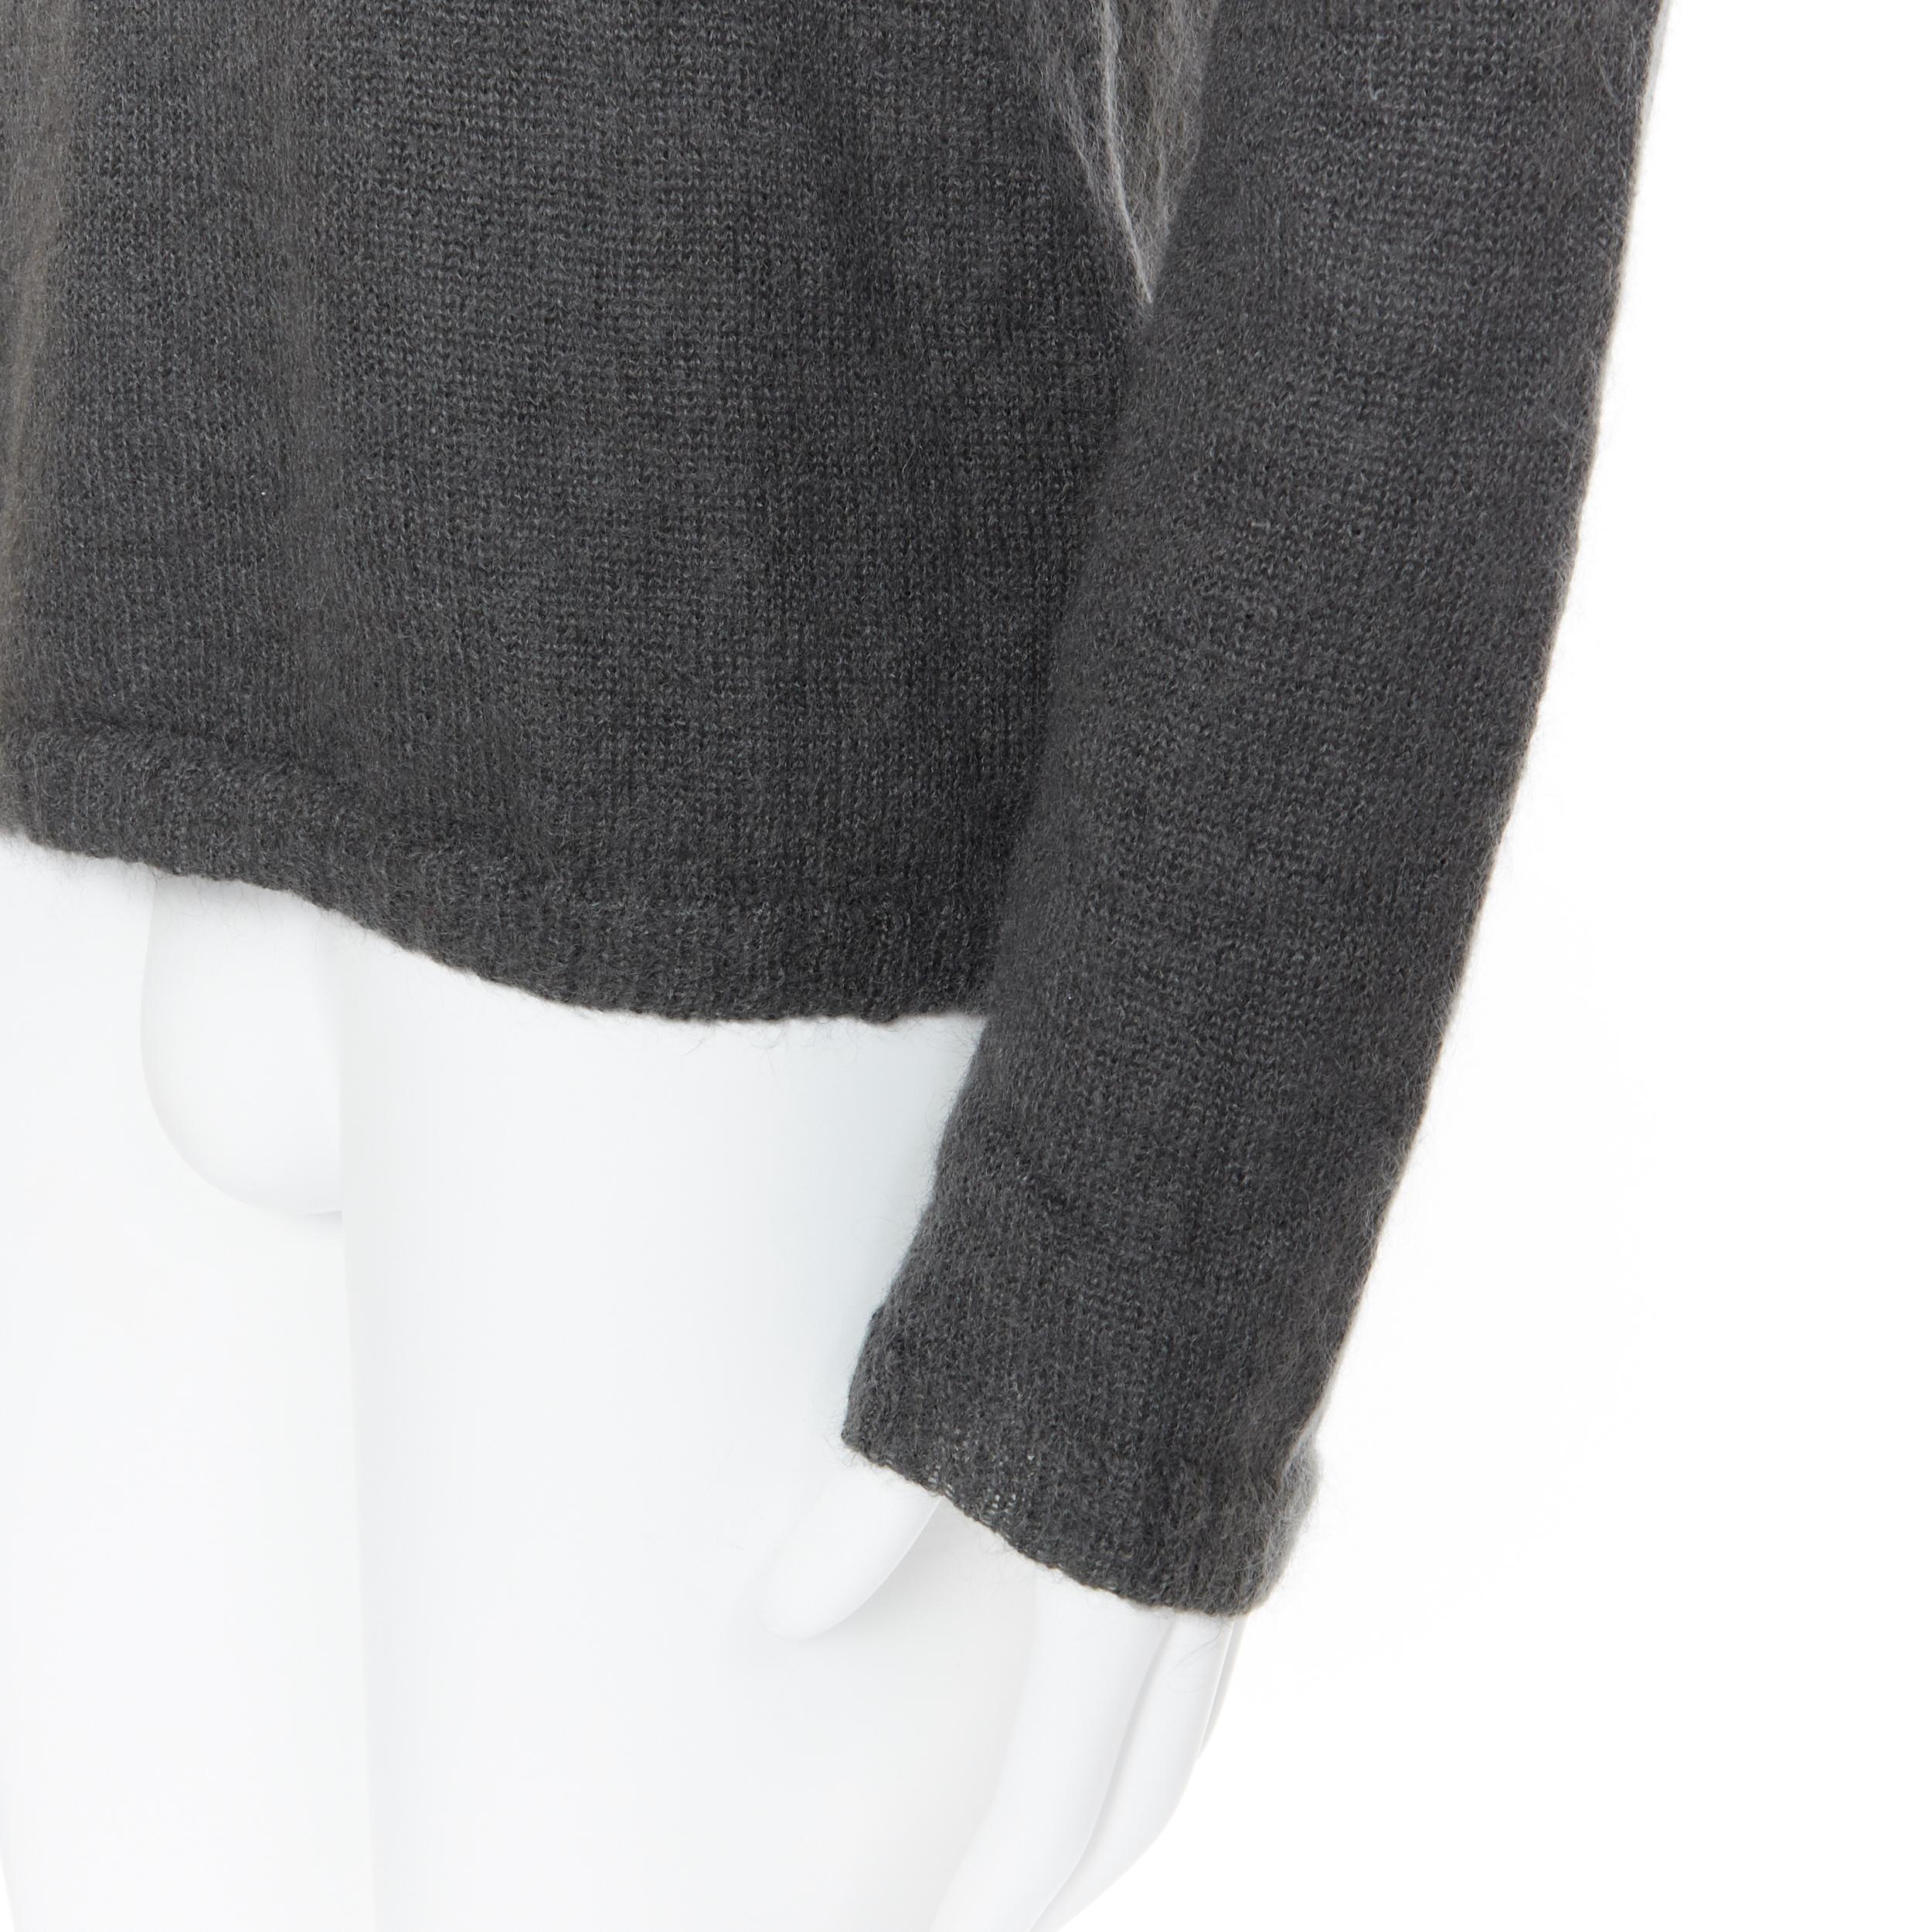 ANN DEMEULEMEESTER mohair wool black grey colorblocked sweater S 2